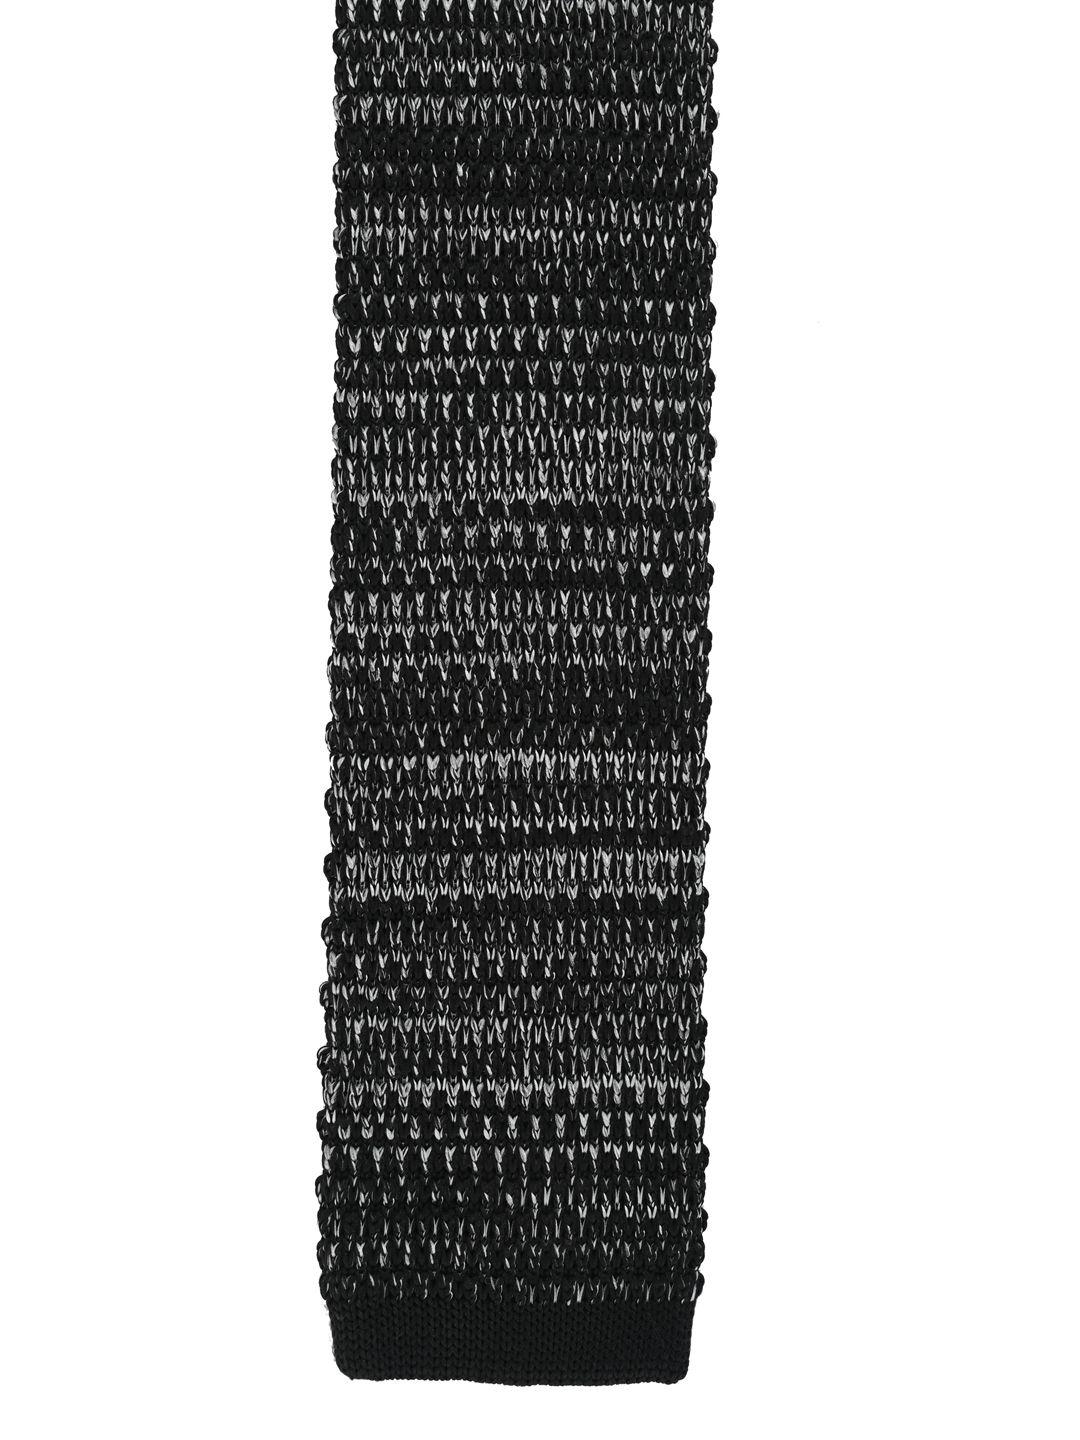 calvadoss black & grey woven design skinny tie